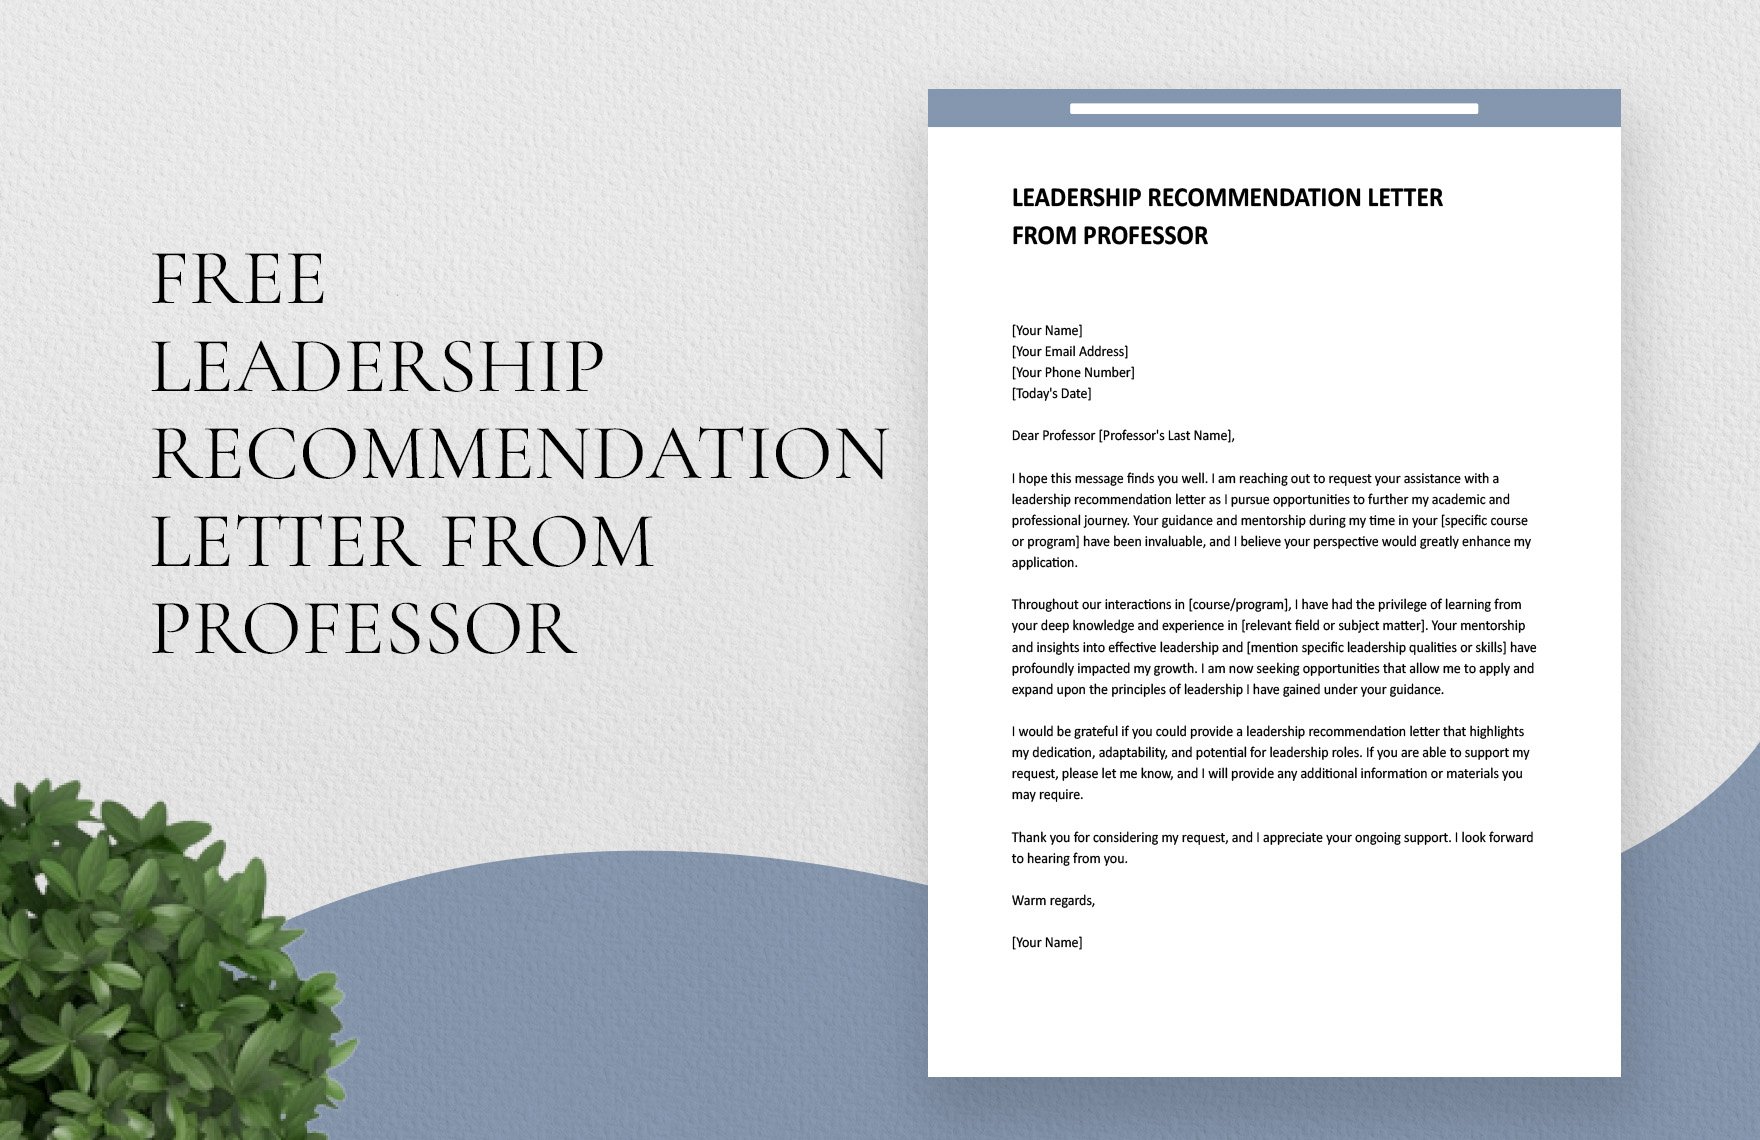 leadership-recommendation-letter-from-professor